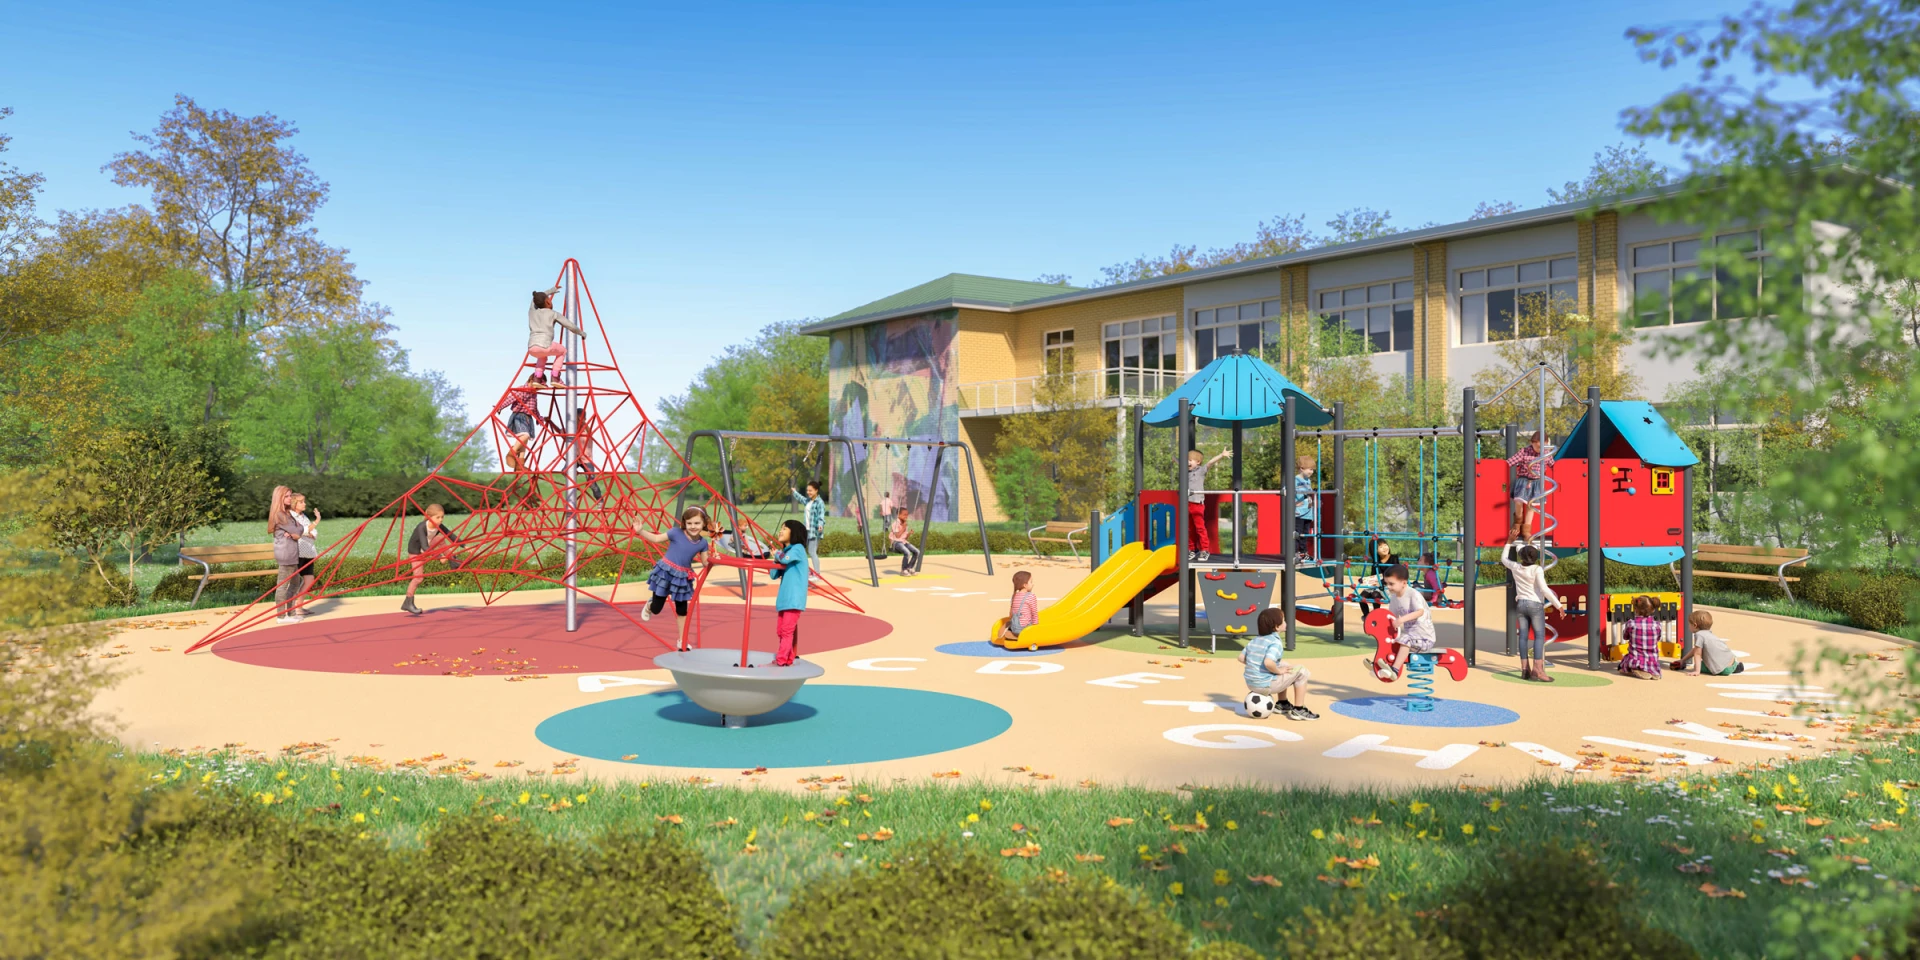 Design idea for a preschool playground